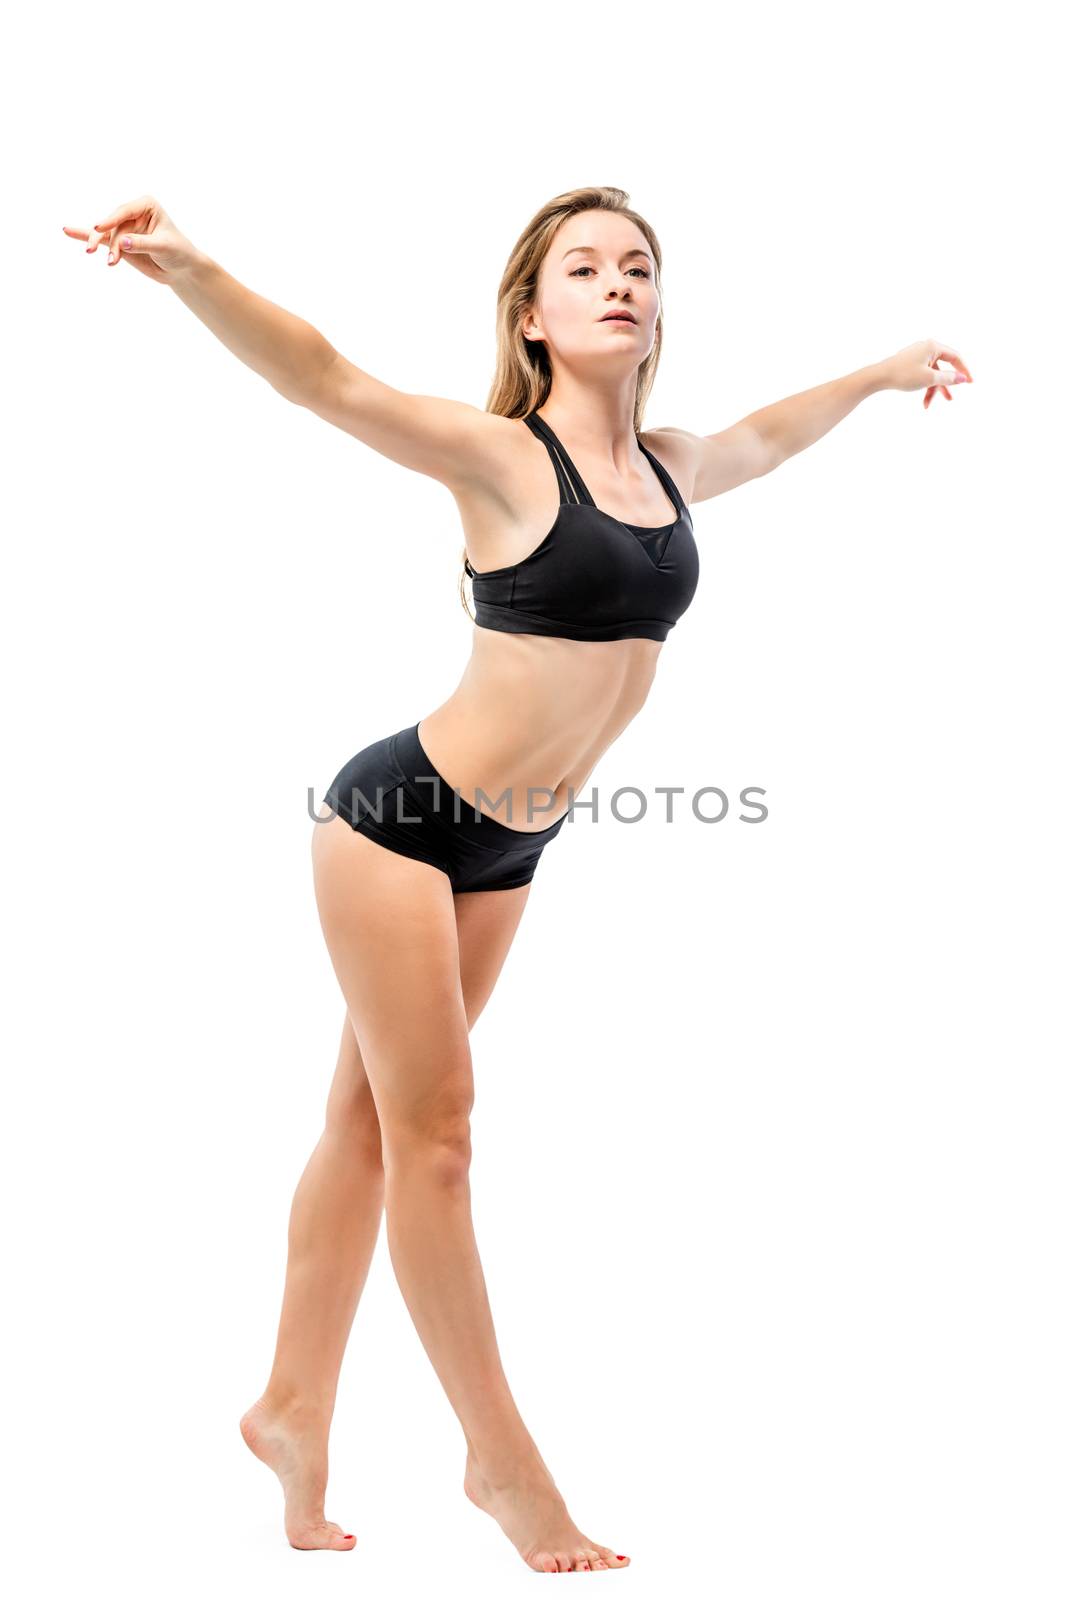 beautiful sportswoman doing relaxation exercises on white backgr by kosmsos111